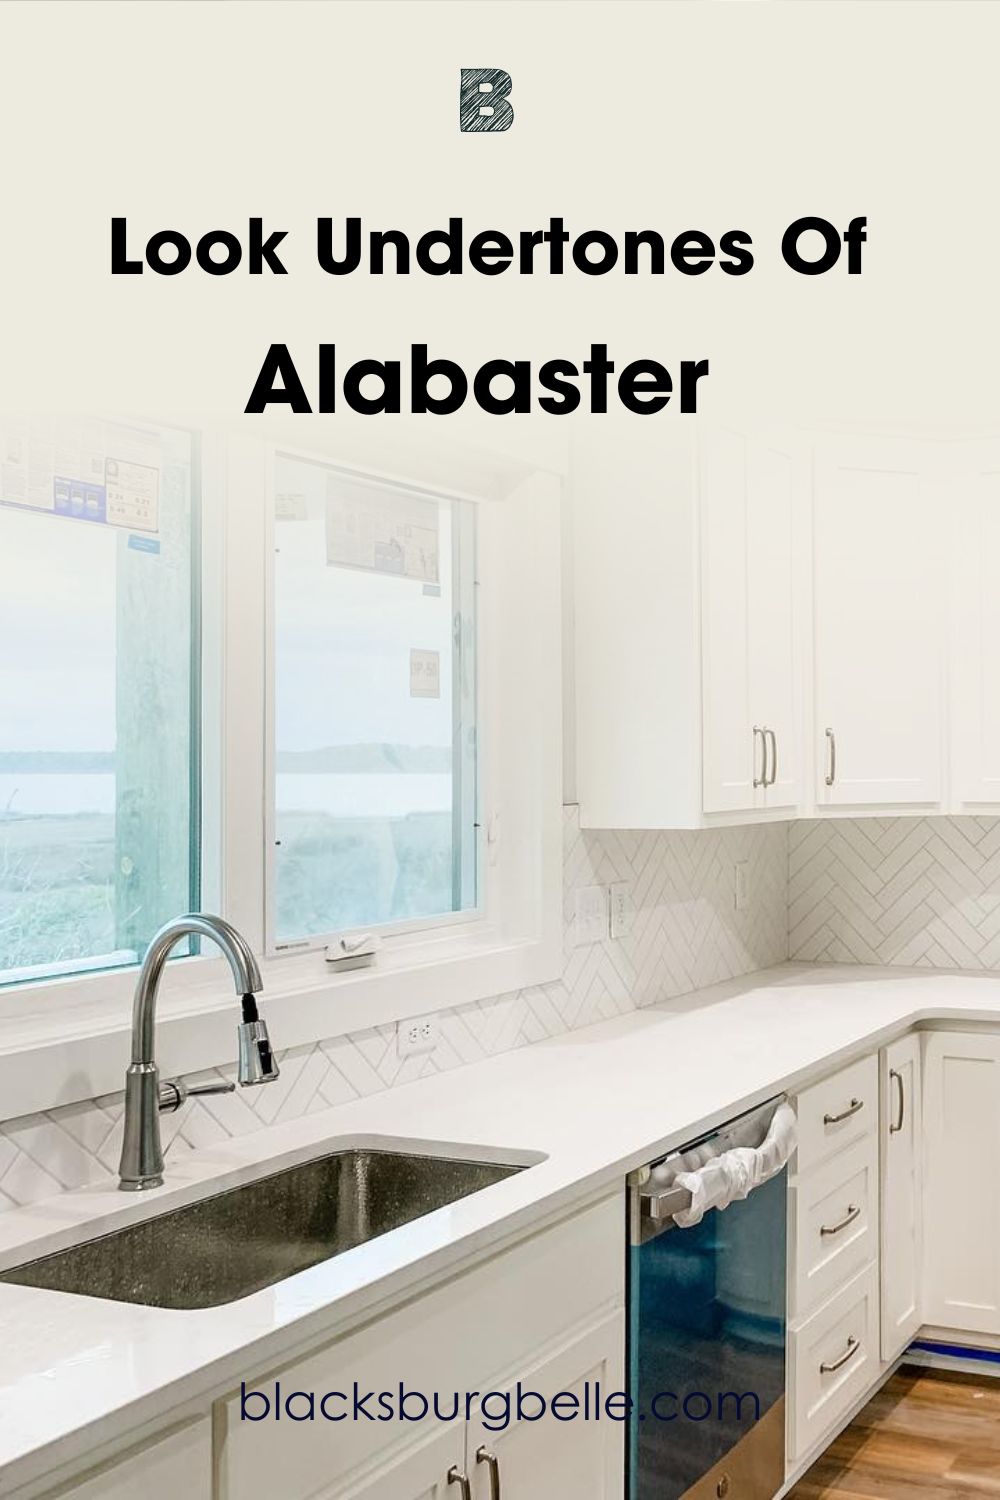 Spotting Alabaster Undertones